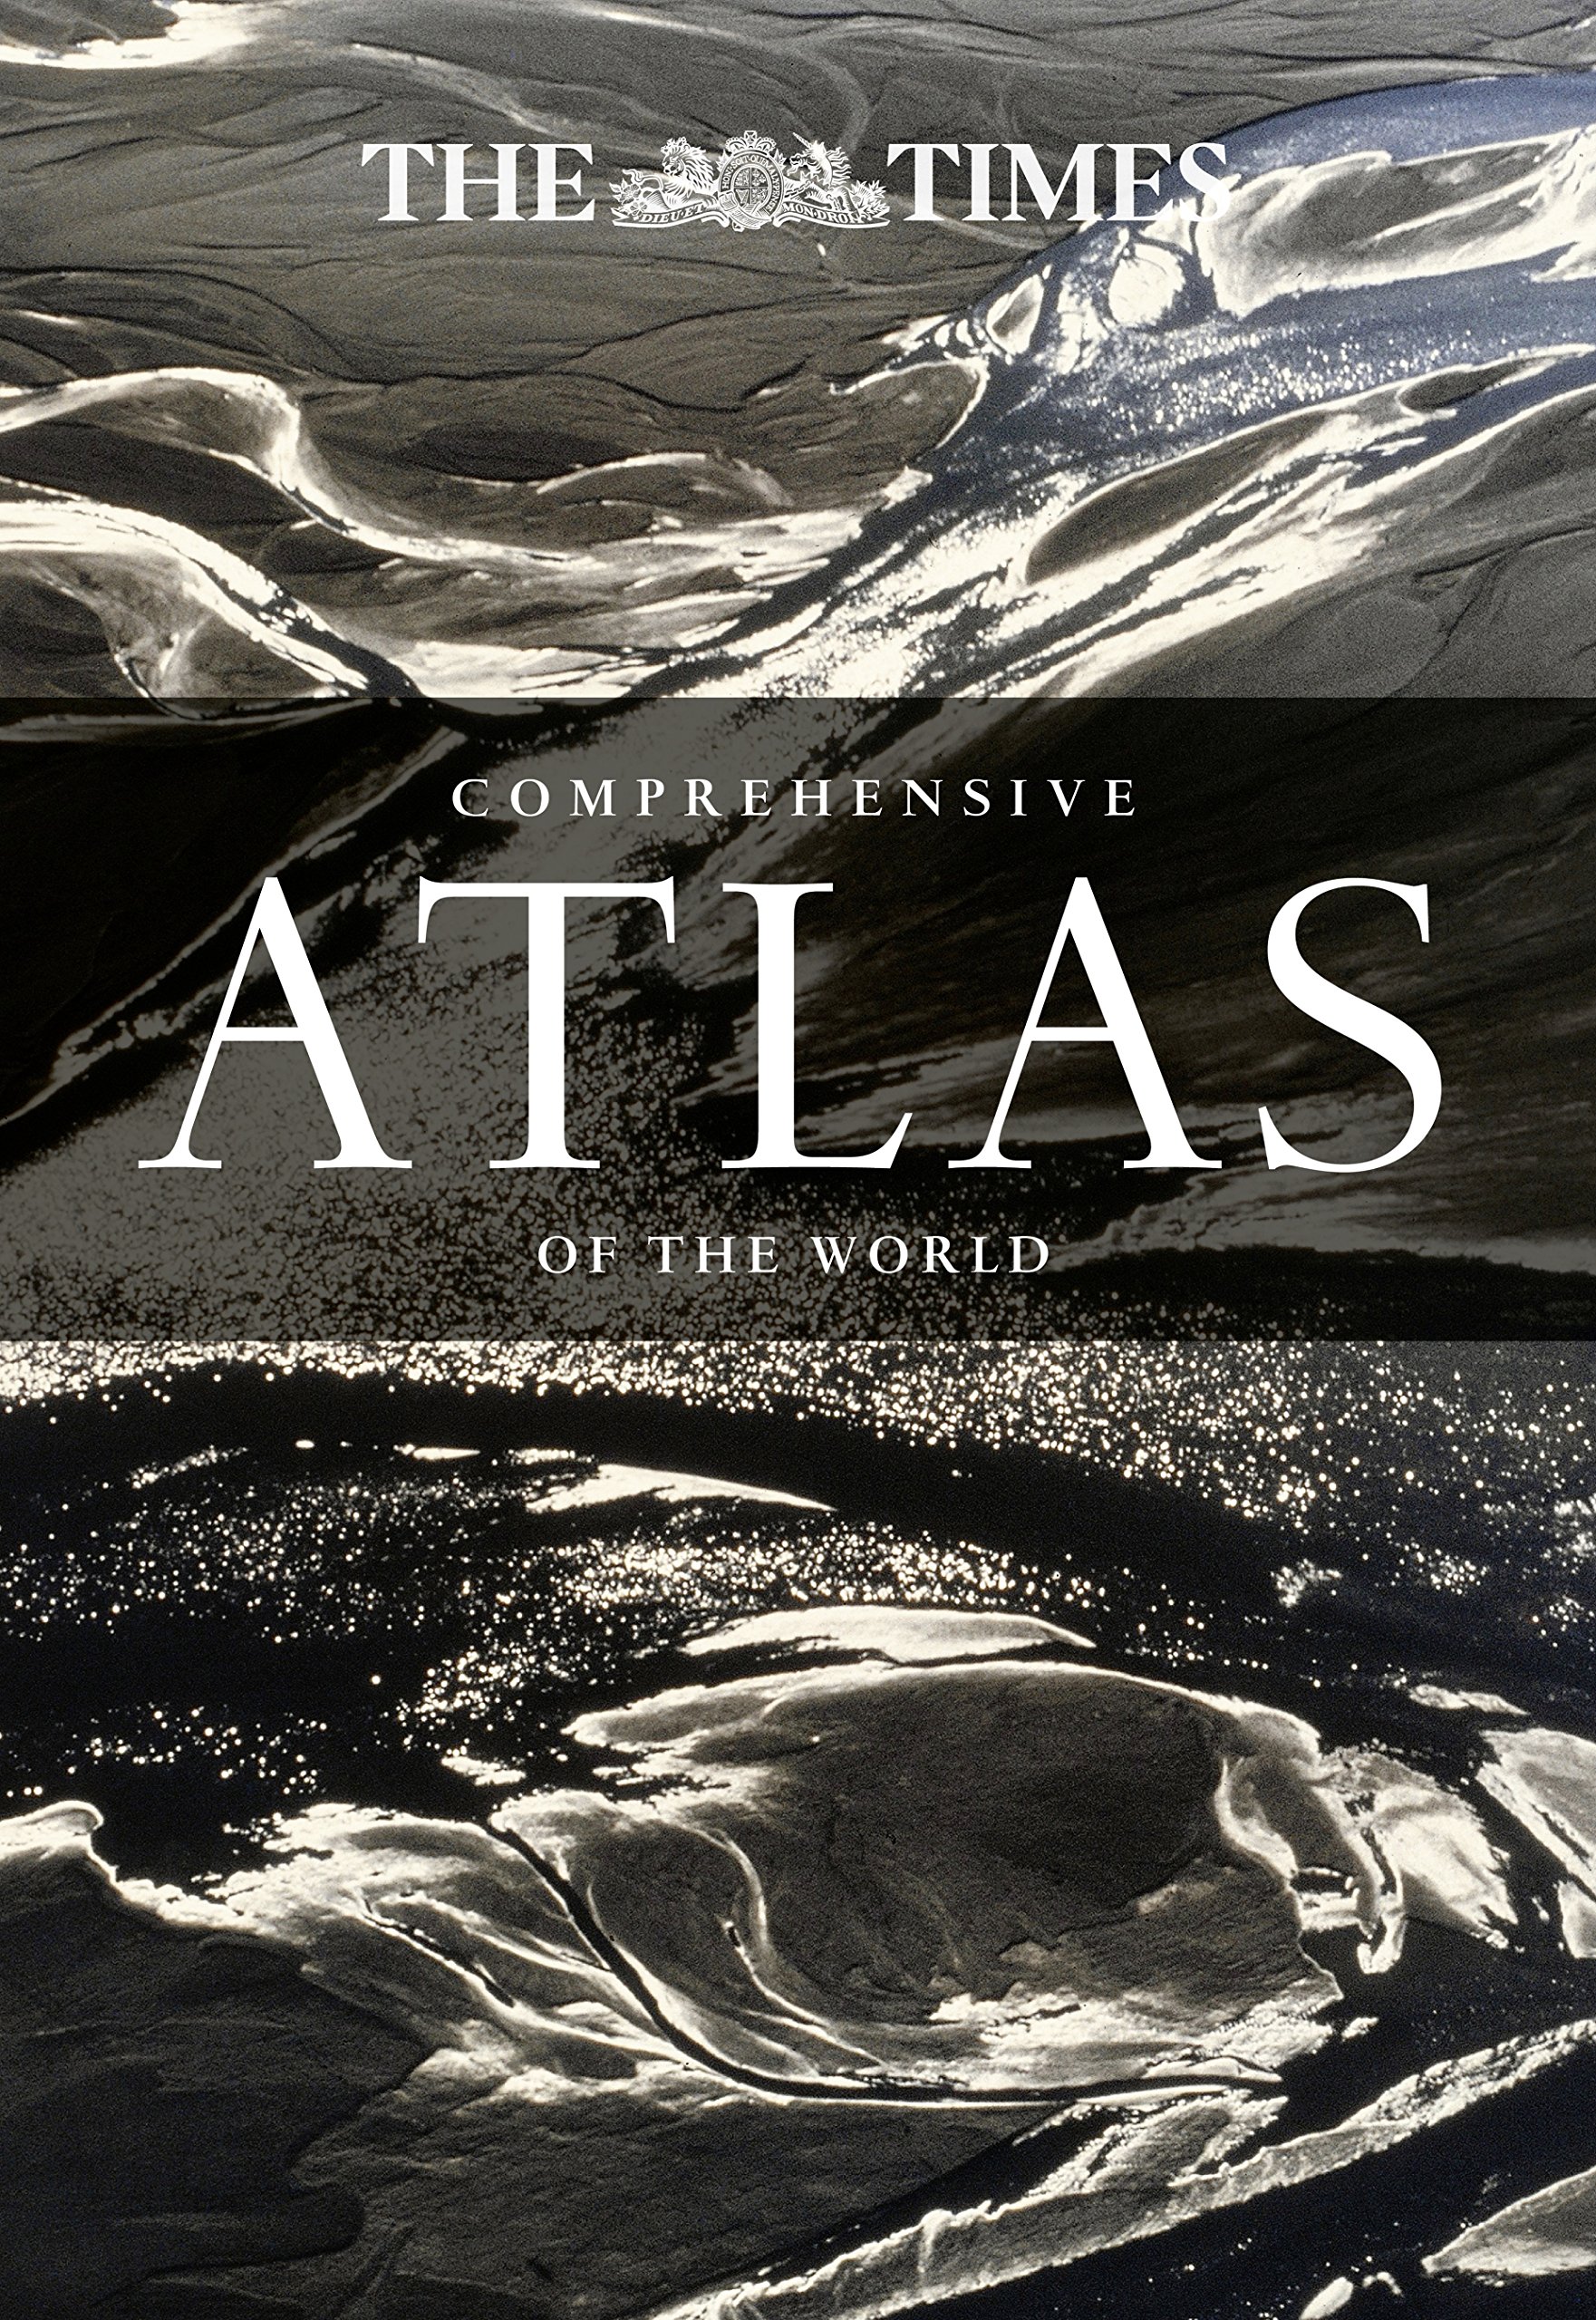 Comprehensive Atlas